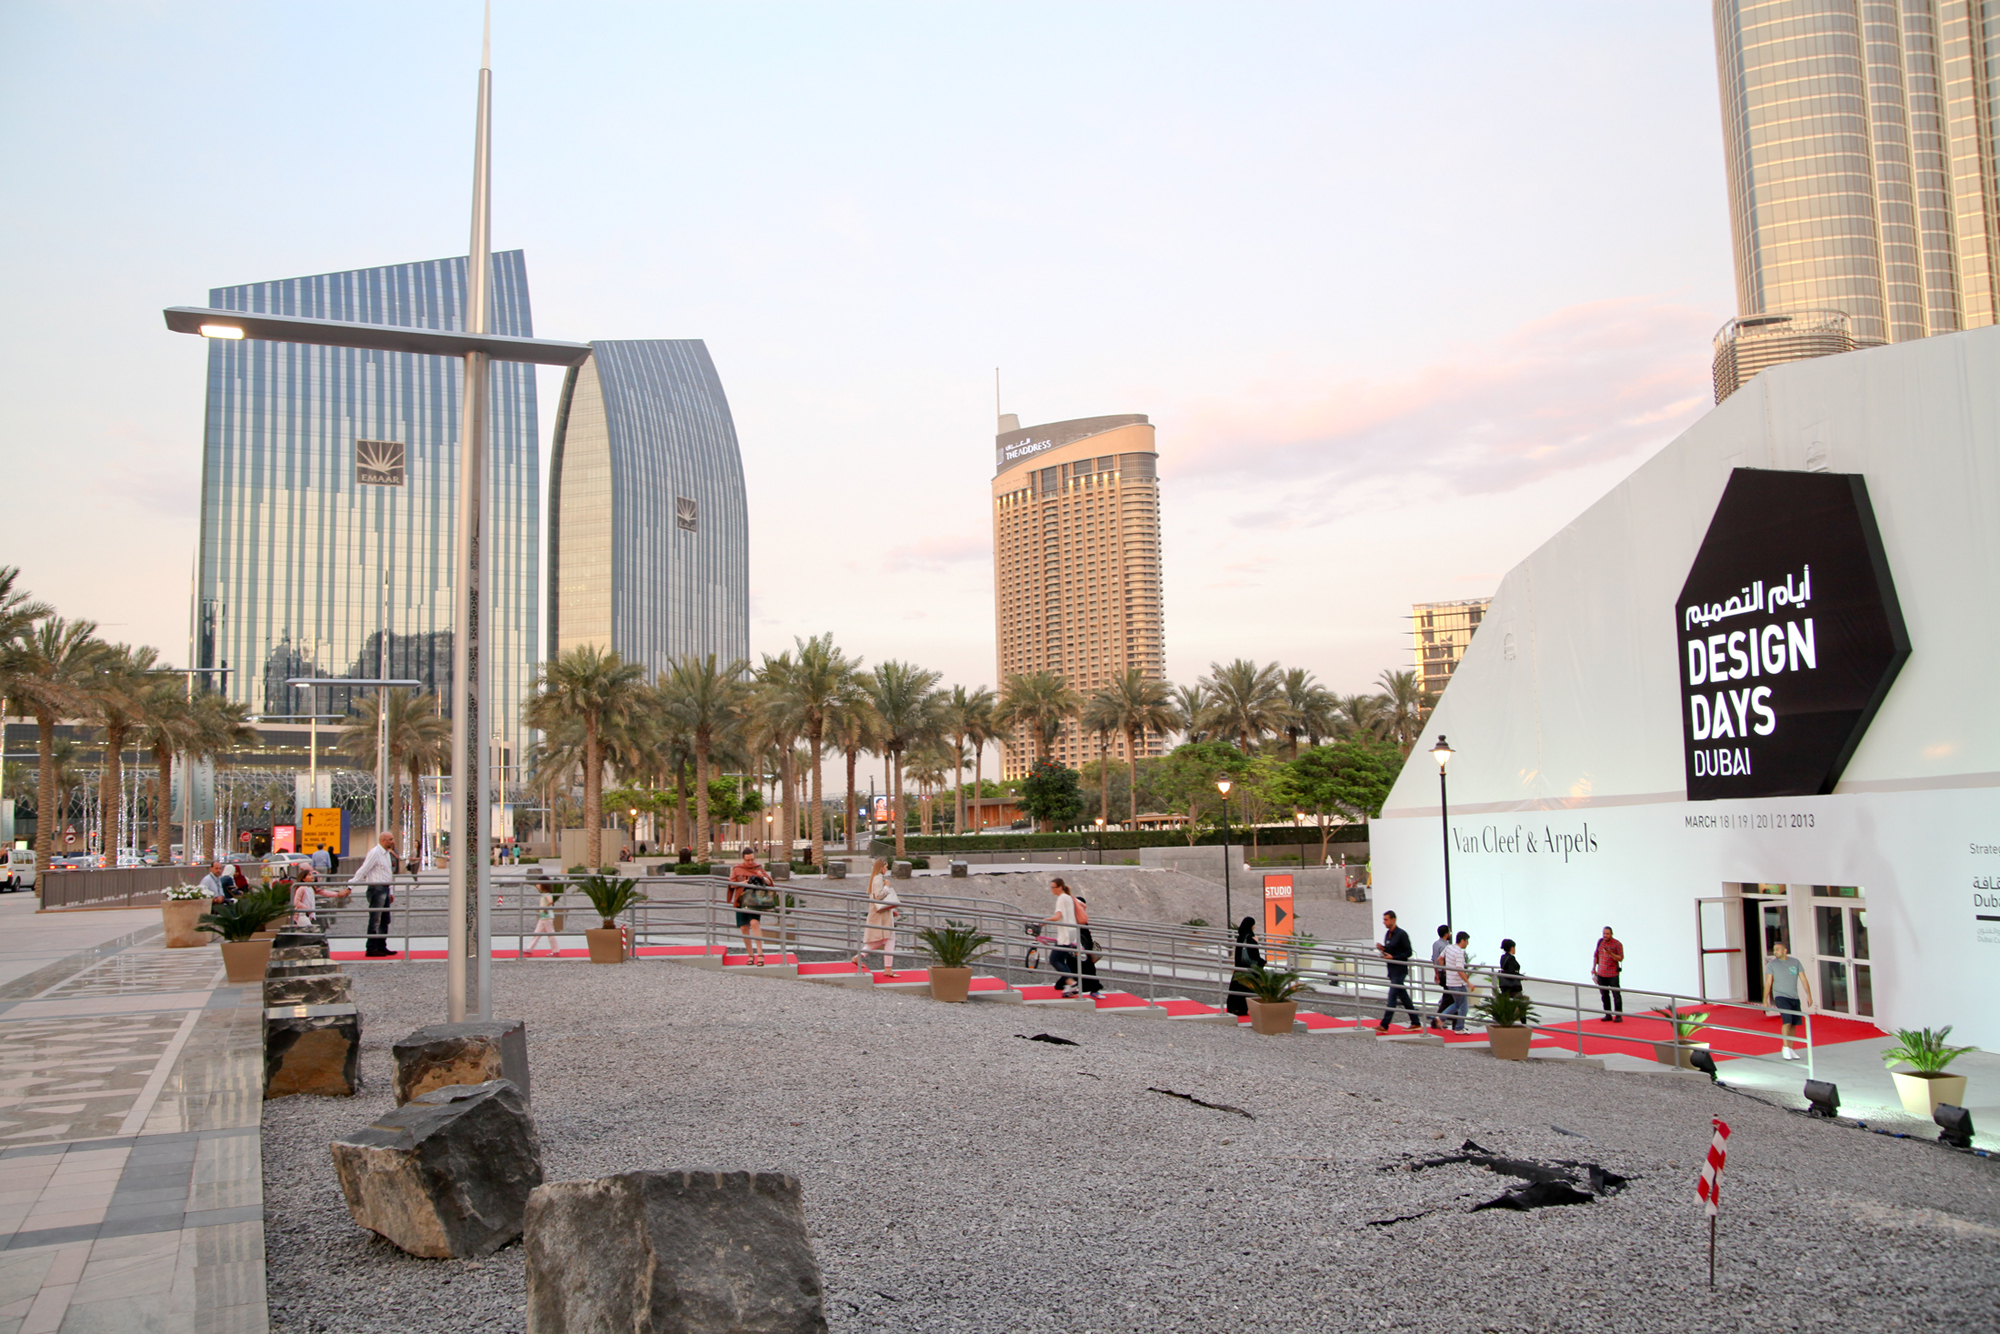 An outdoor view of the Design Days Dubai 2013 venue.